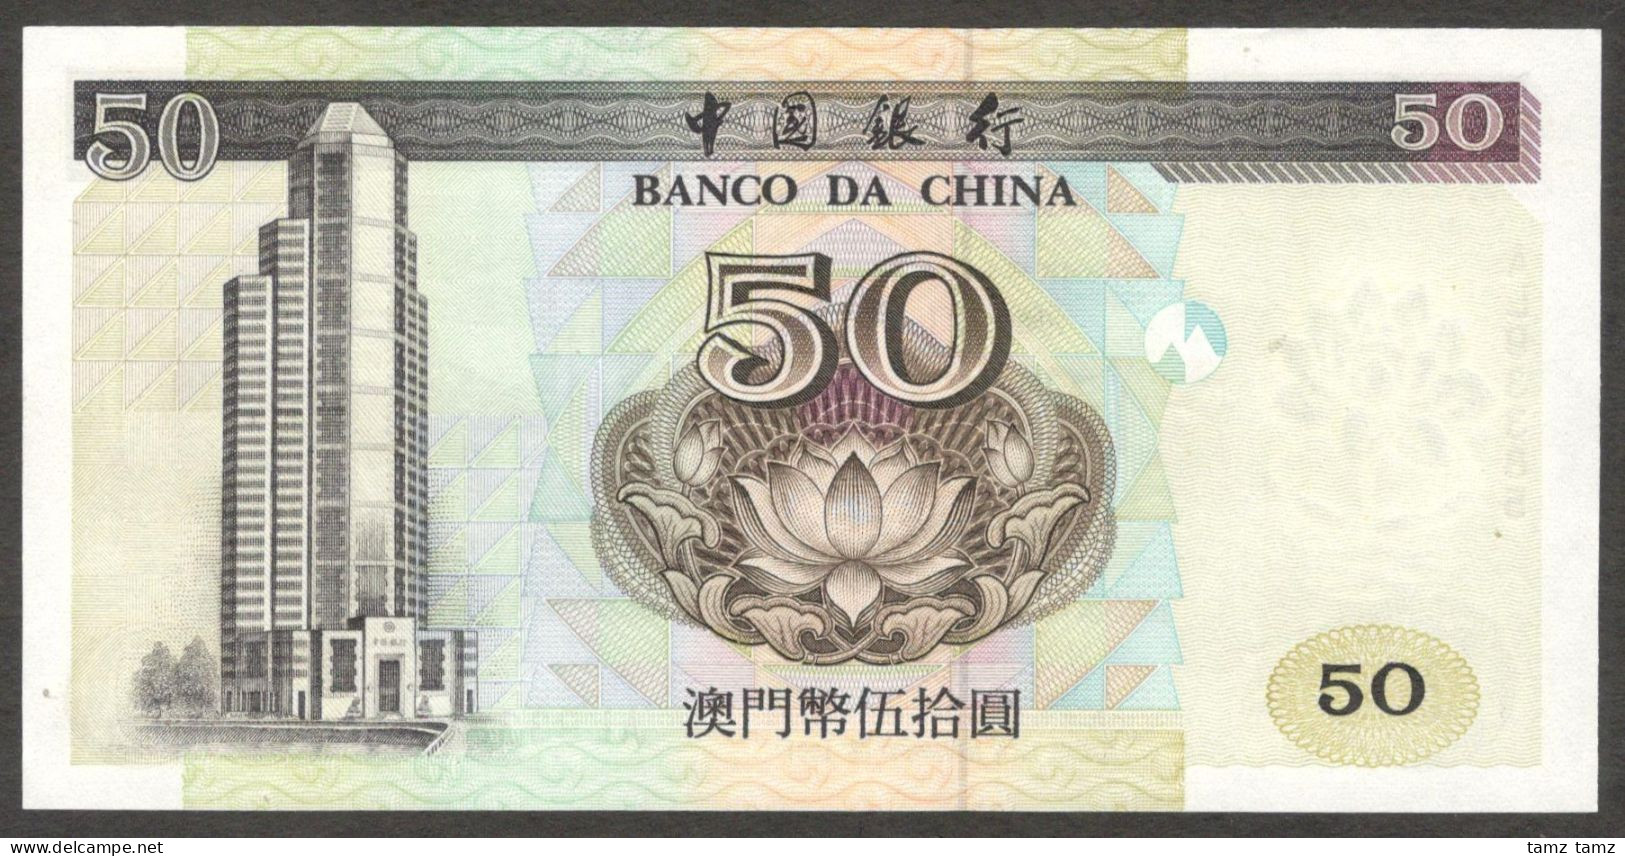 Macau Macao SAR 50 Patacas Banco Da China P-92b 1997 UNC - Macau